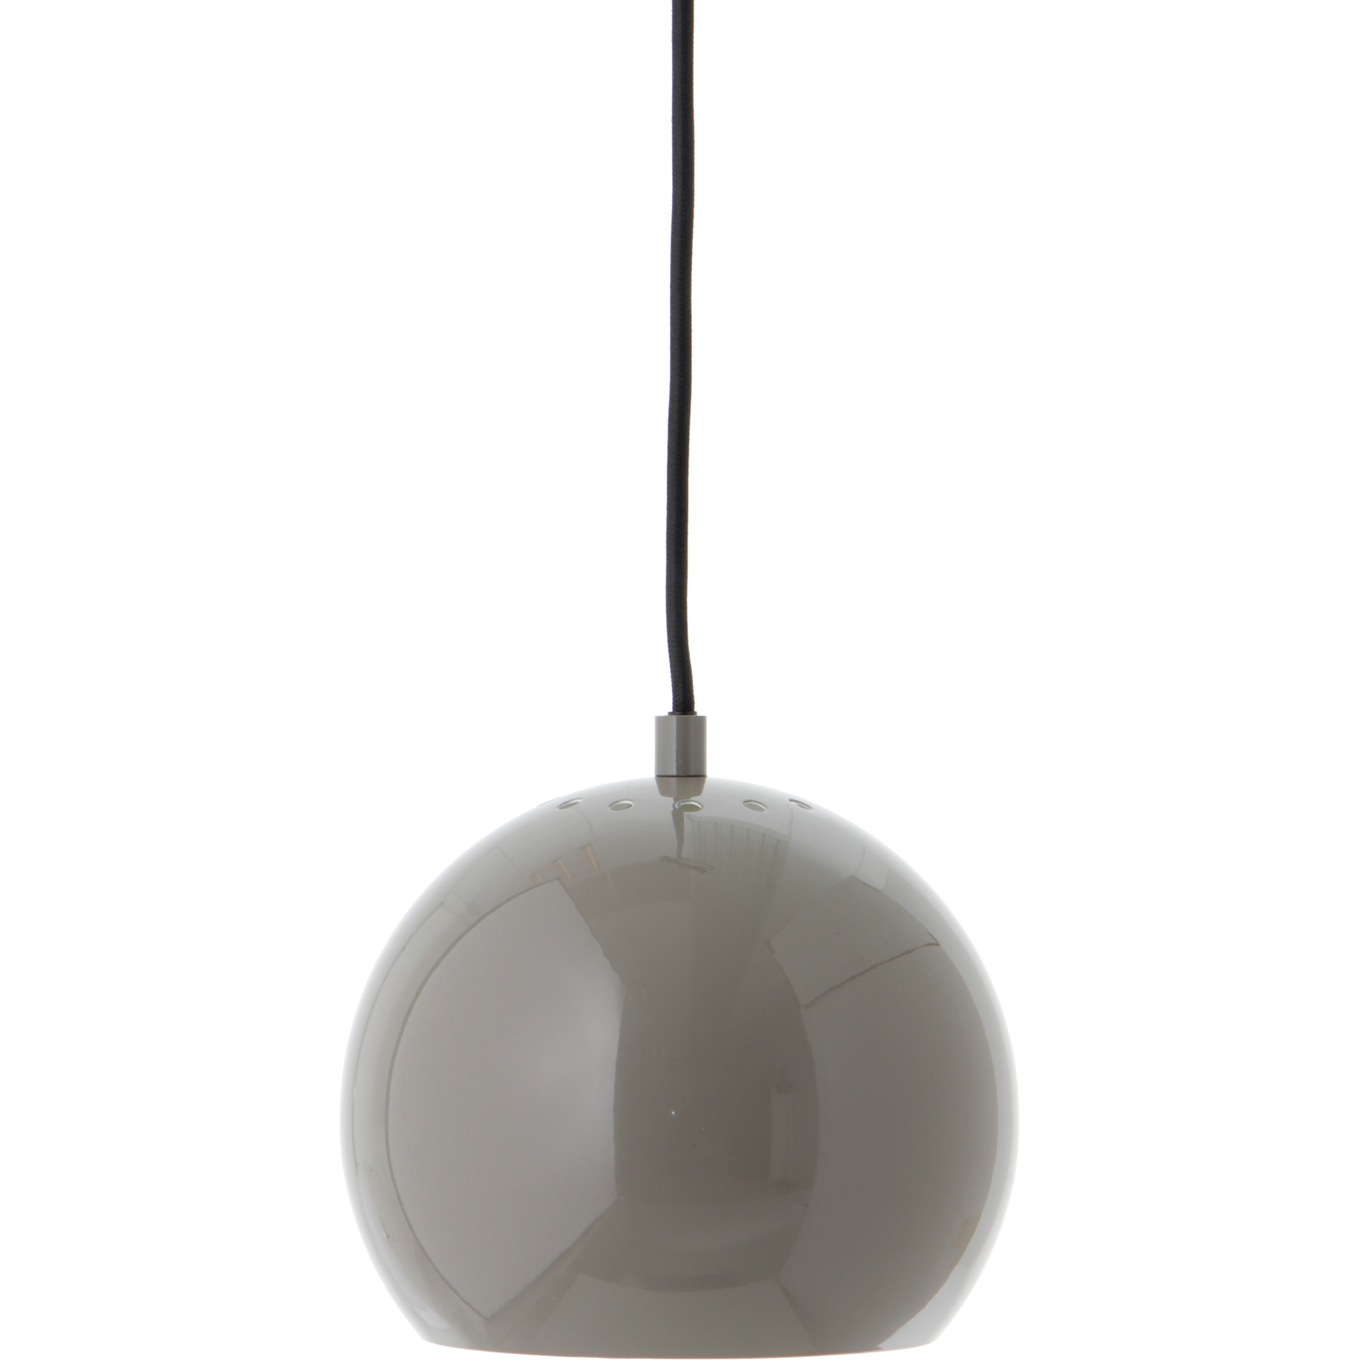 Ball Hanglamp 18 cm, Glossy Warm Grijs